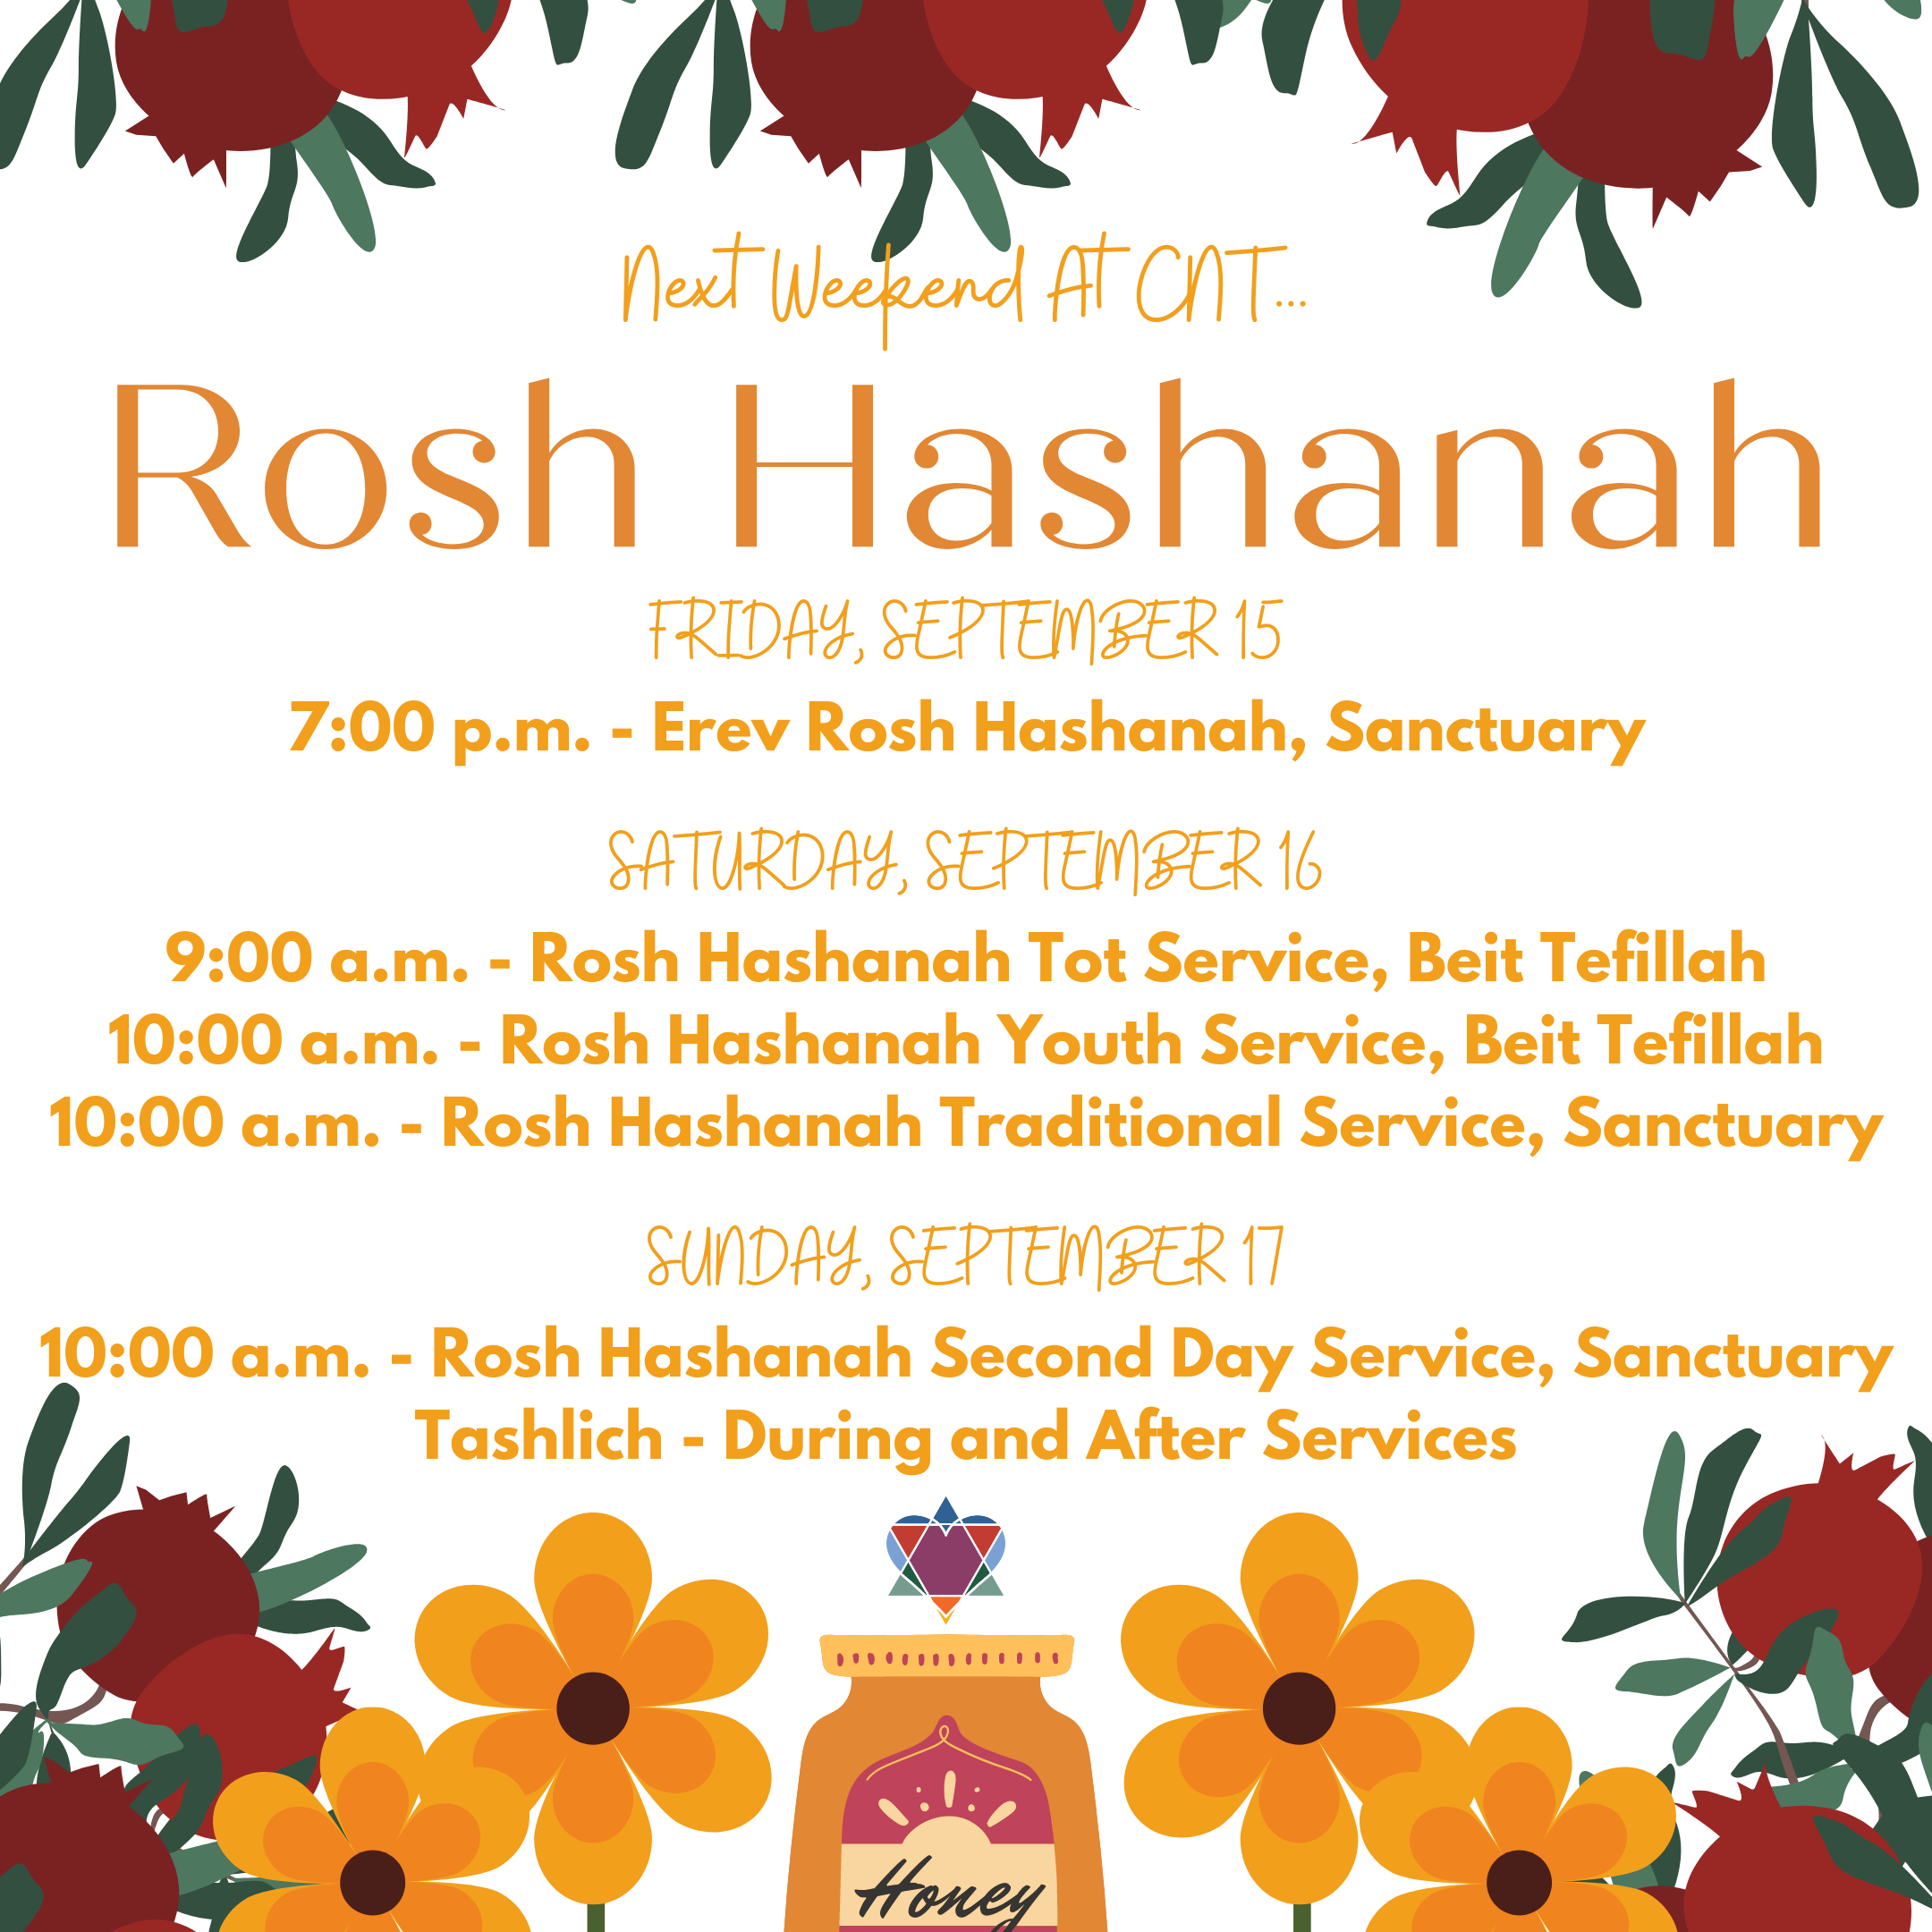 ROSH HASHANAH WEEKEND